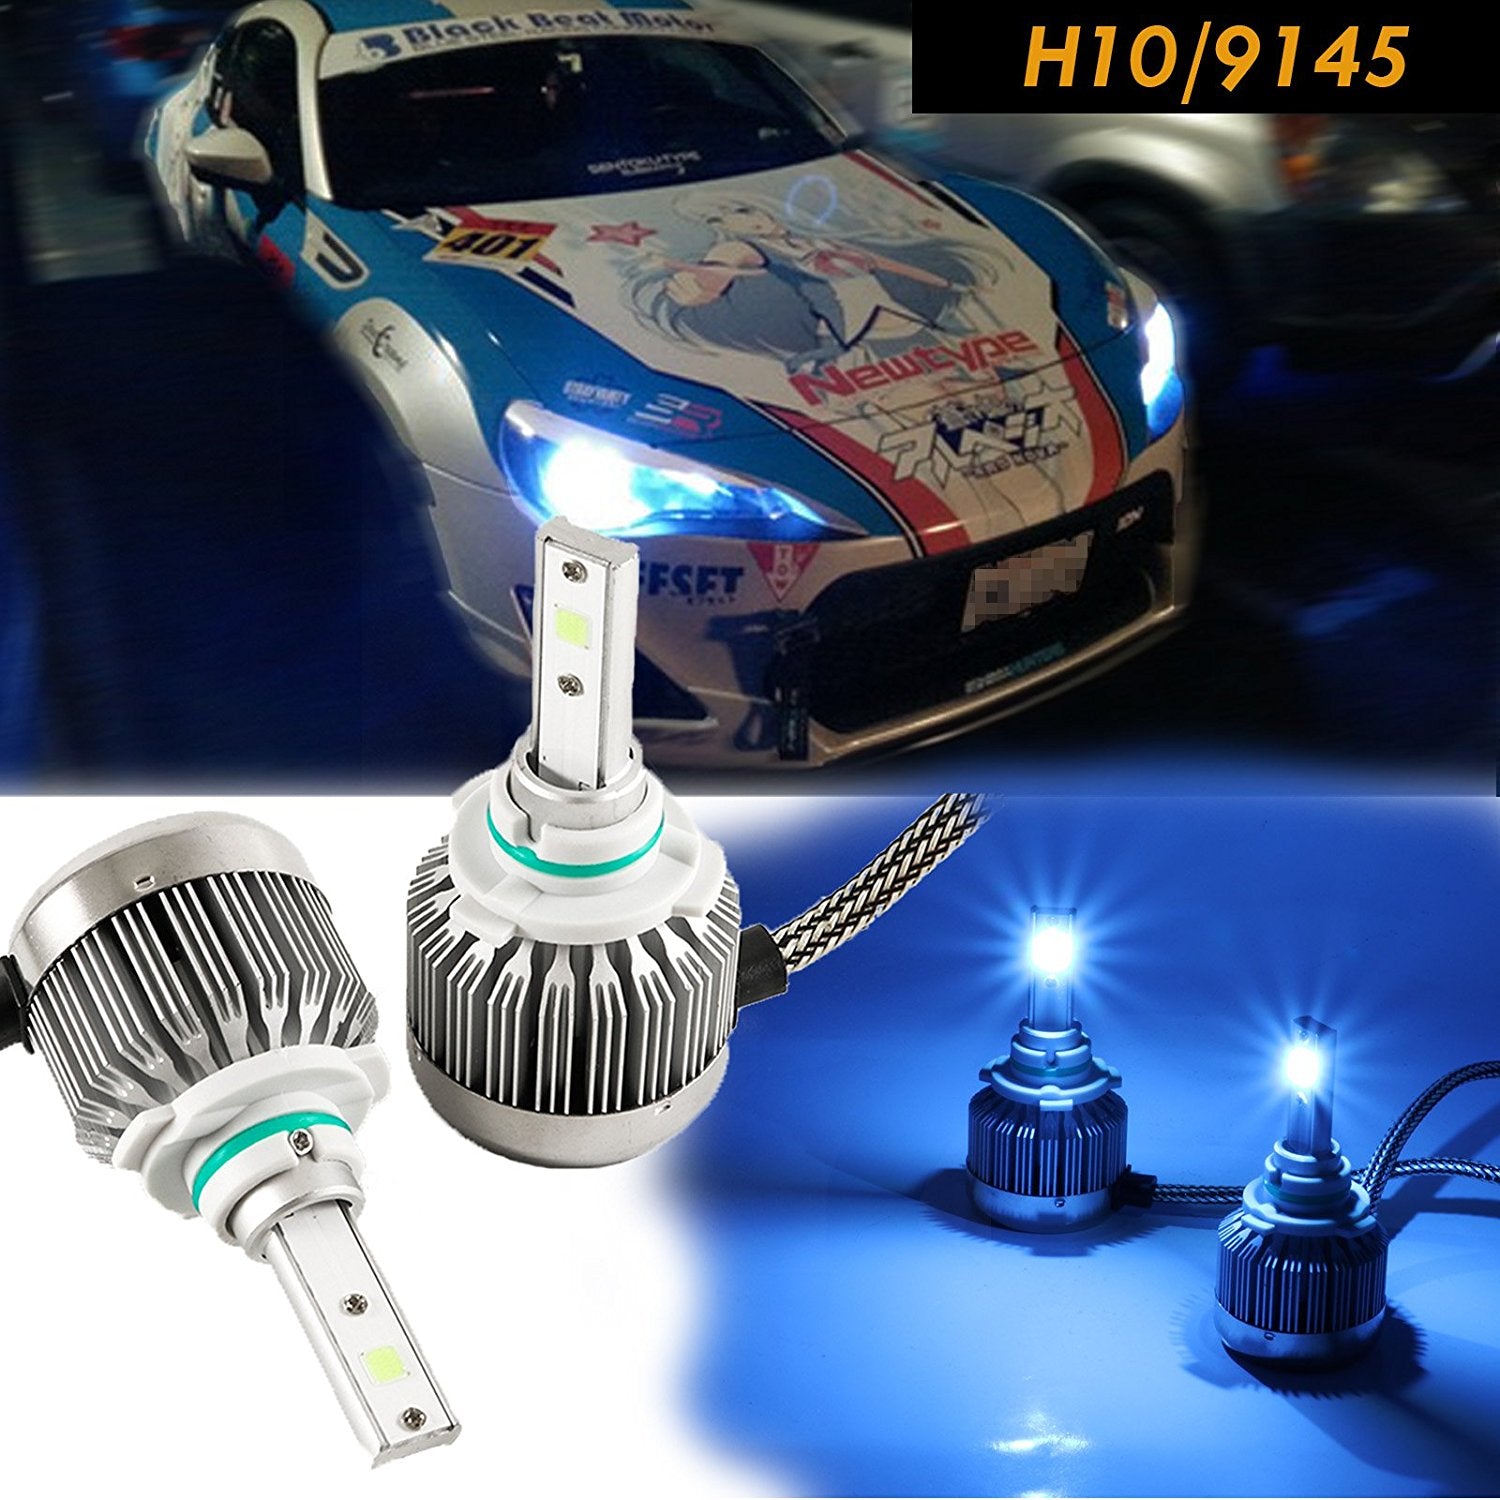 Xotic Tech H8 H9 H11 LED Headlight Bulbs, Ice Blue 8000K COB LED